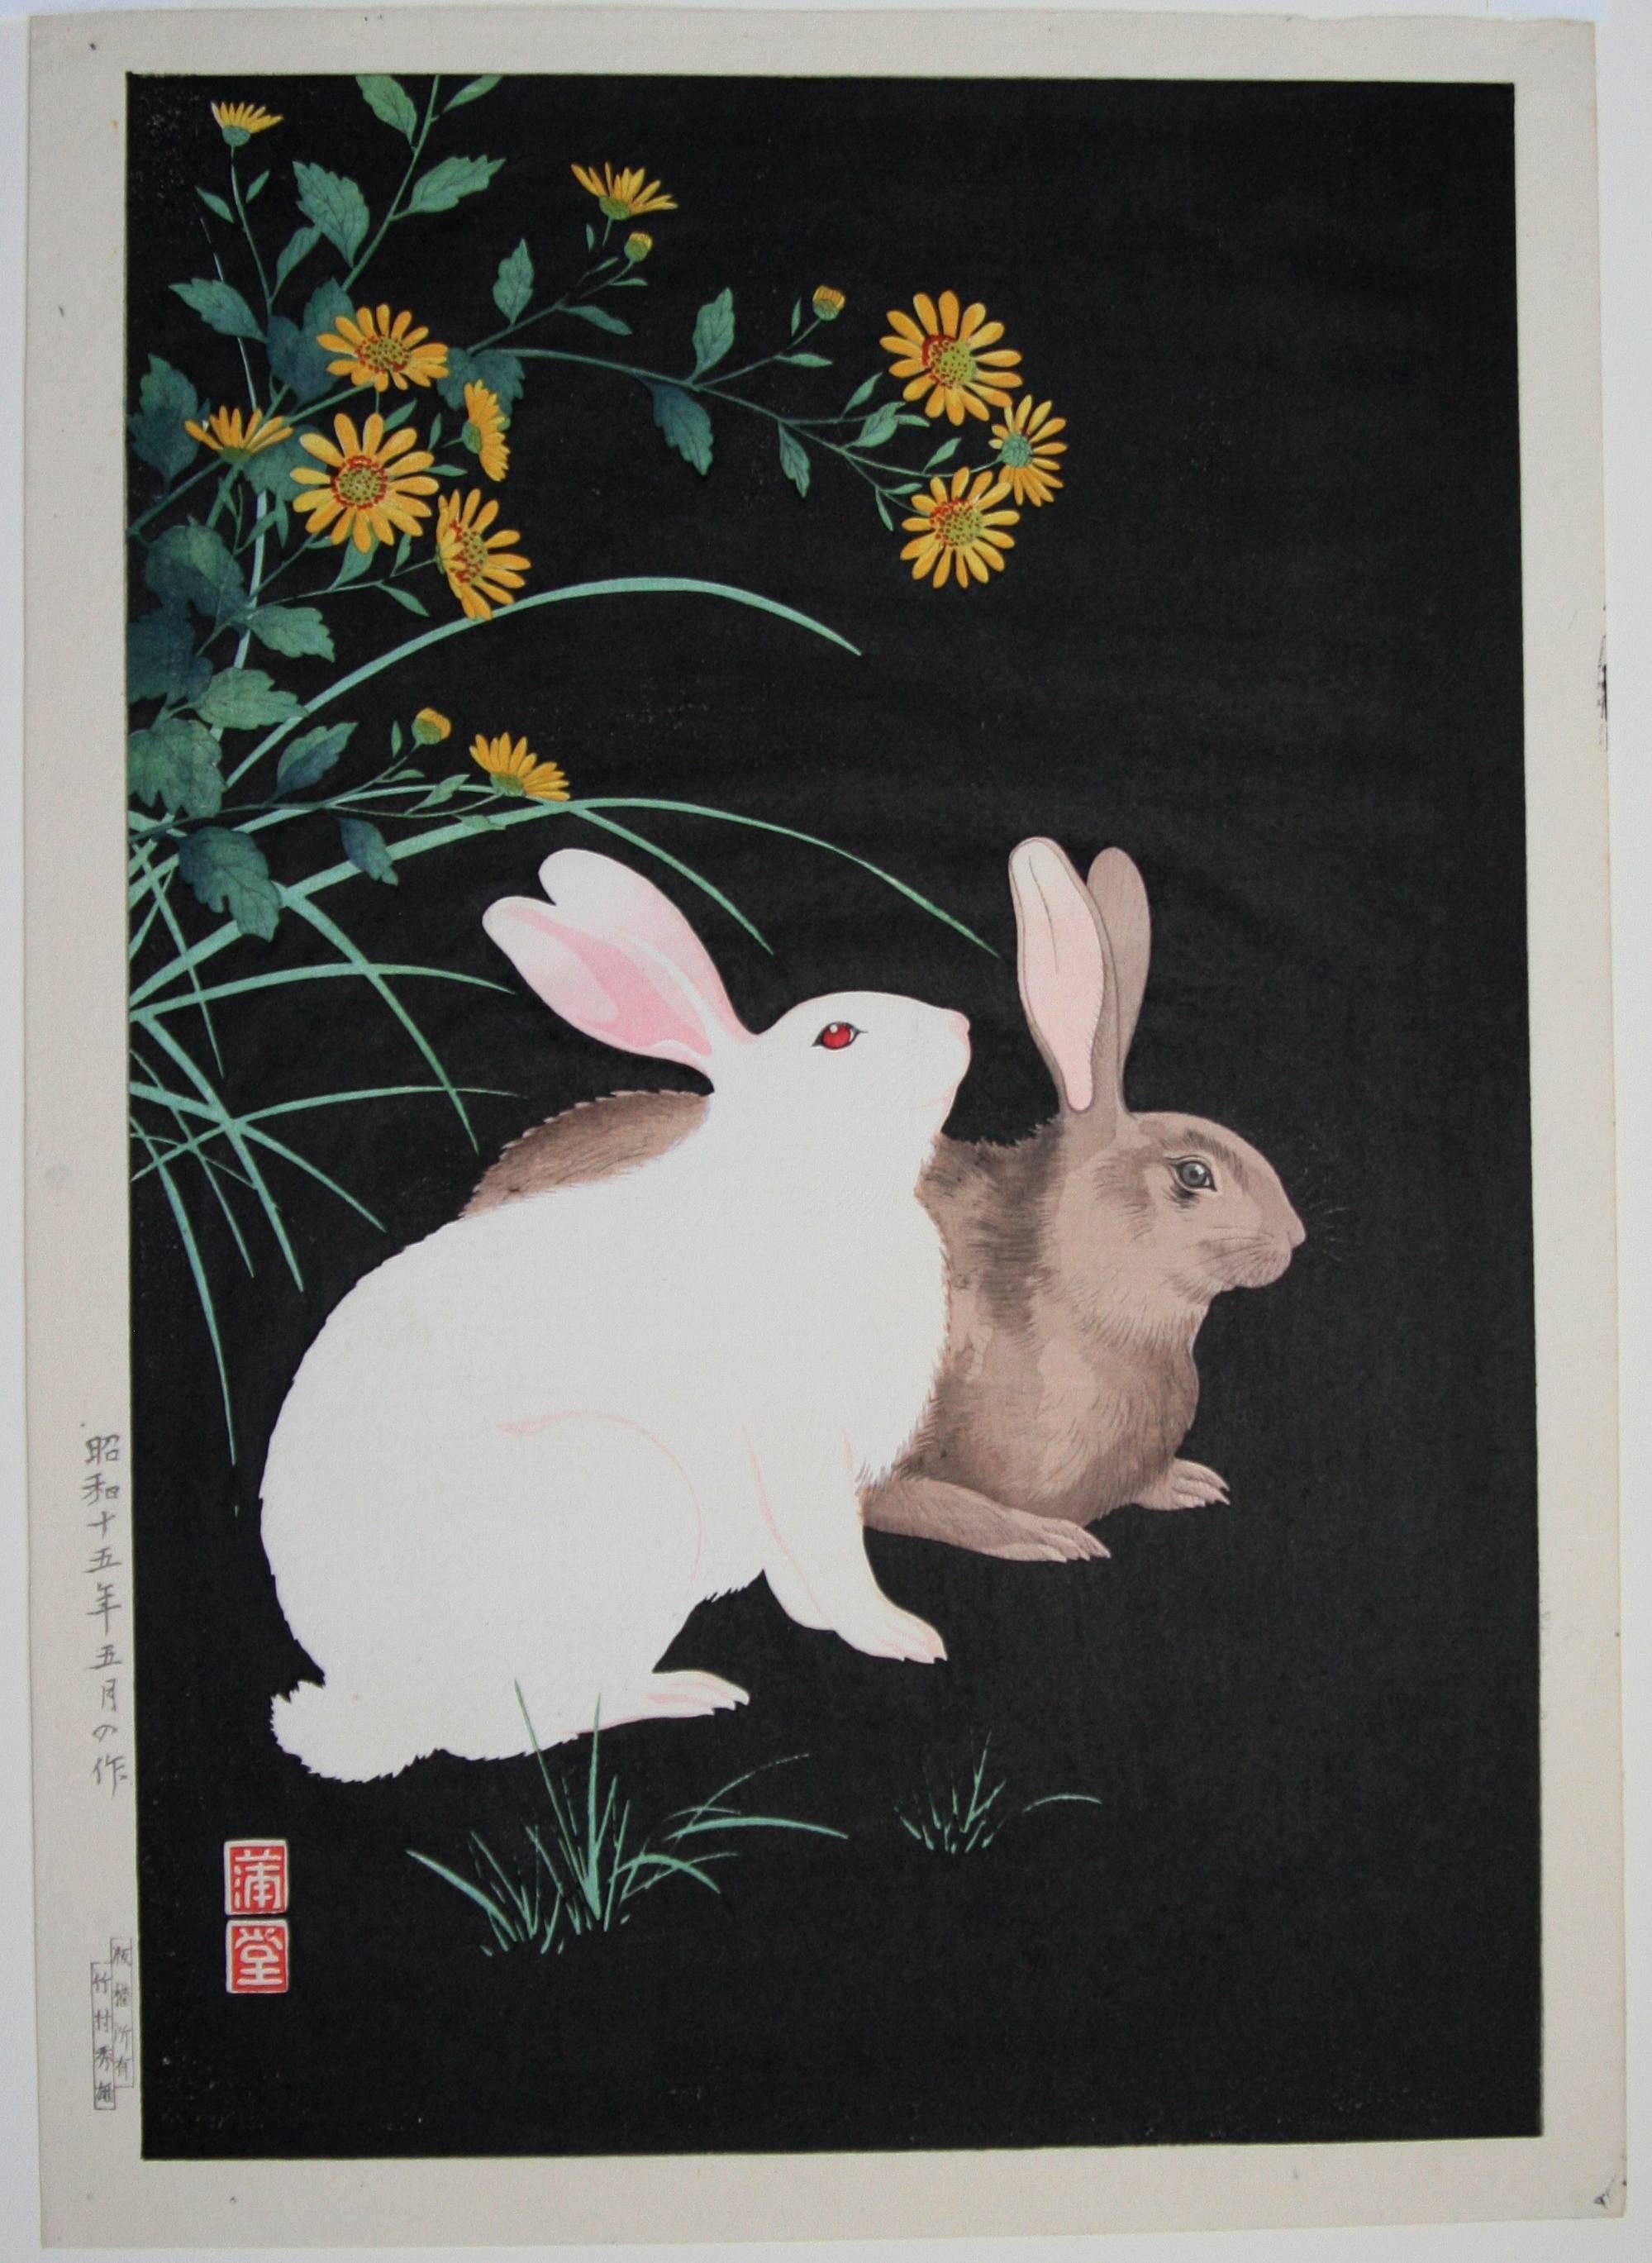 Two Rabbits at Night. - Print by Nishimura Hodo